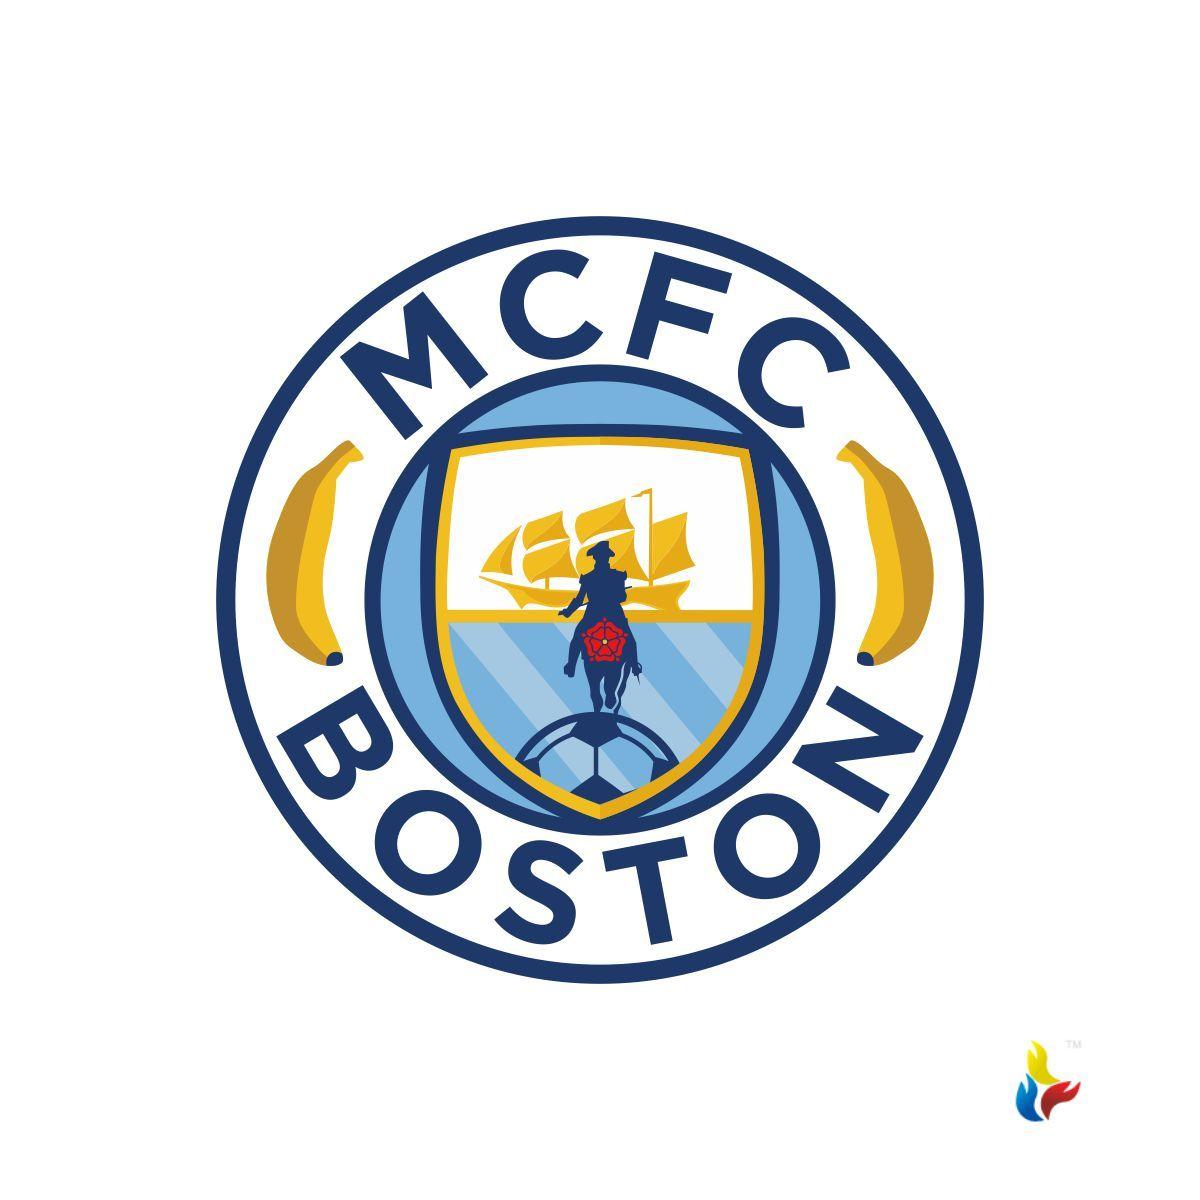 M.C.f.c Logo - Playful, Personable, Group Logo Design for MCFC Boston